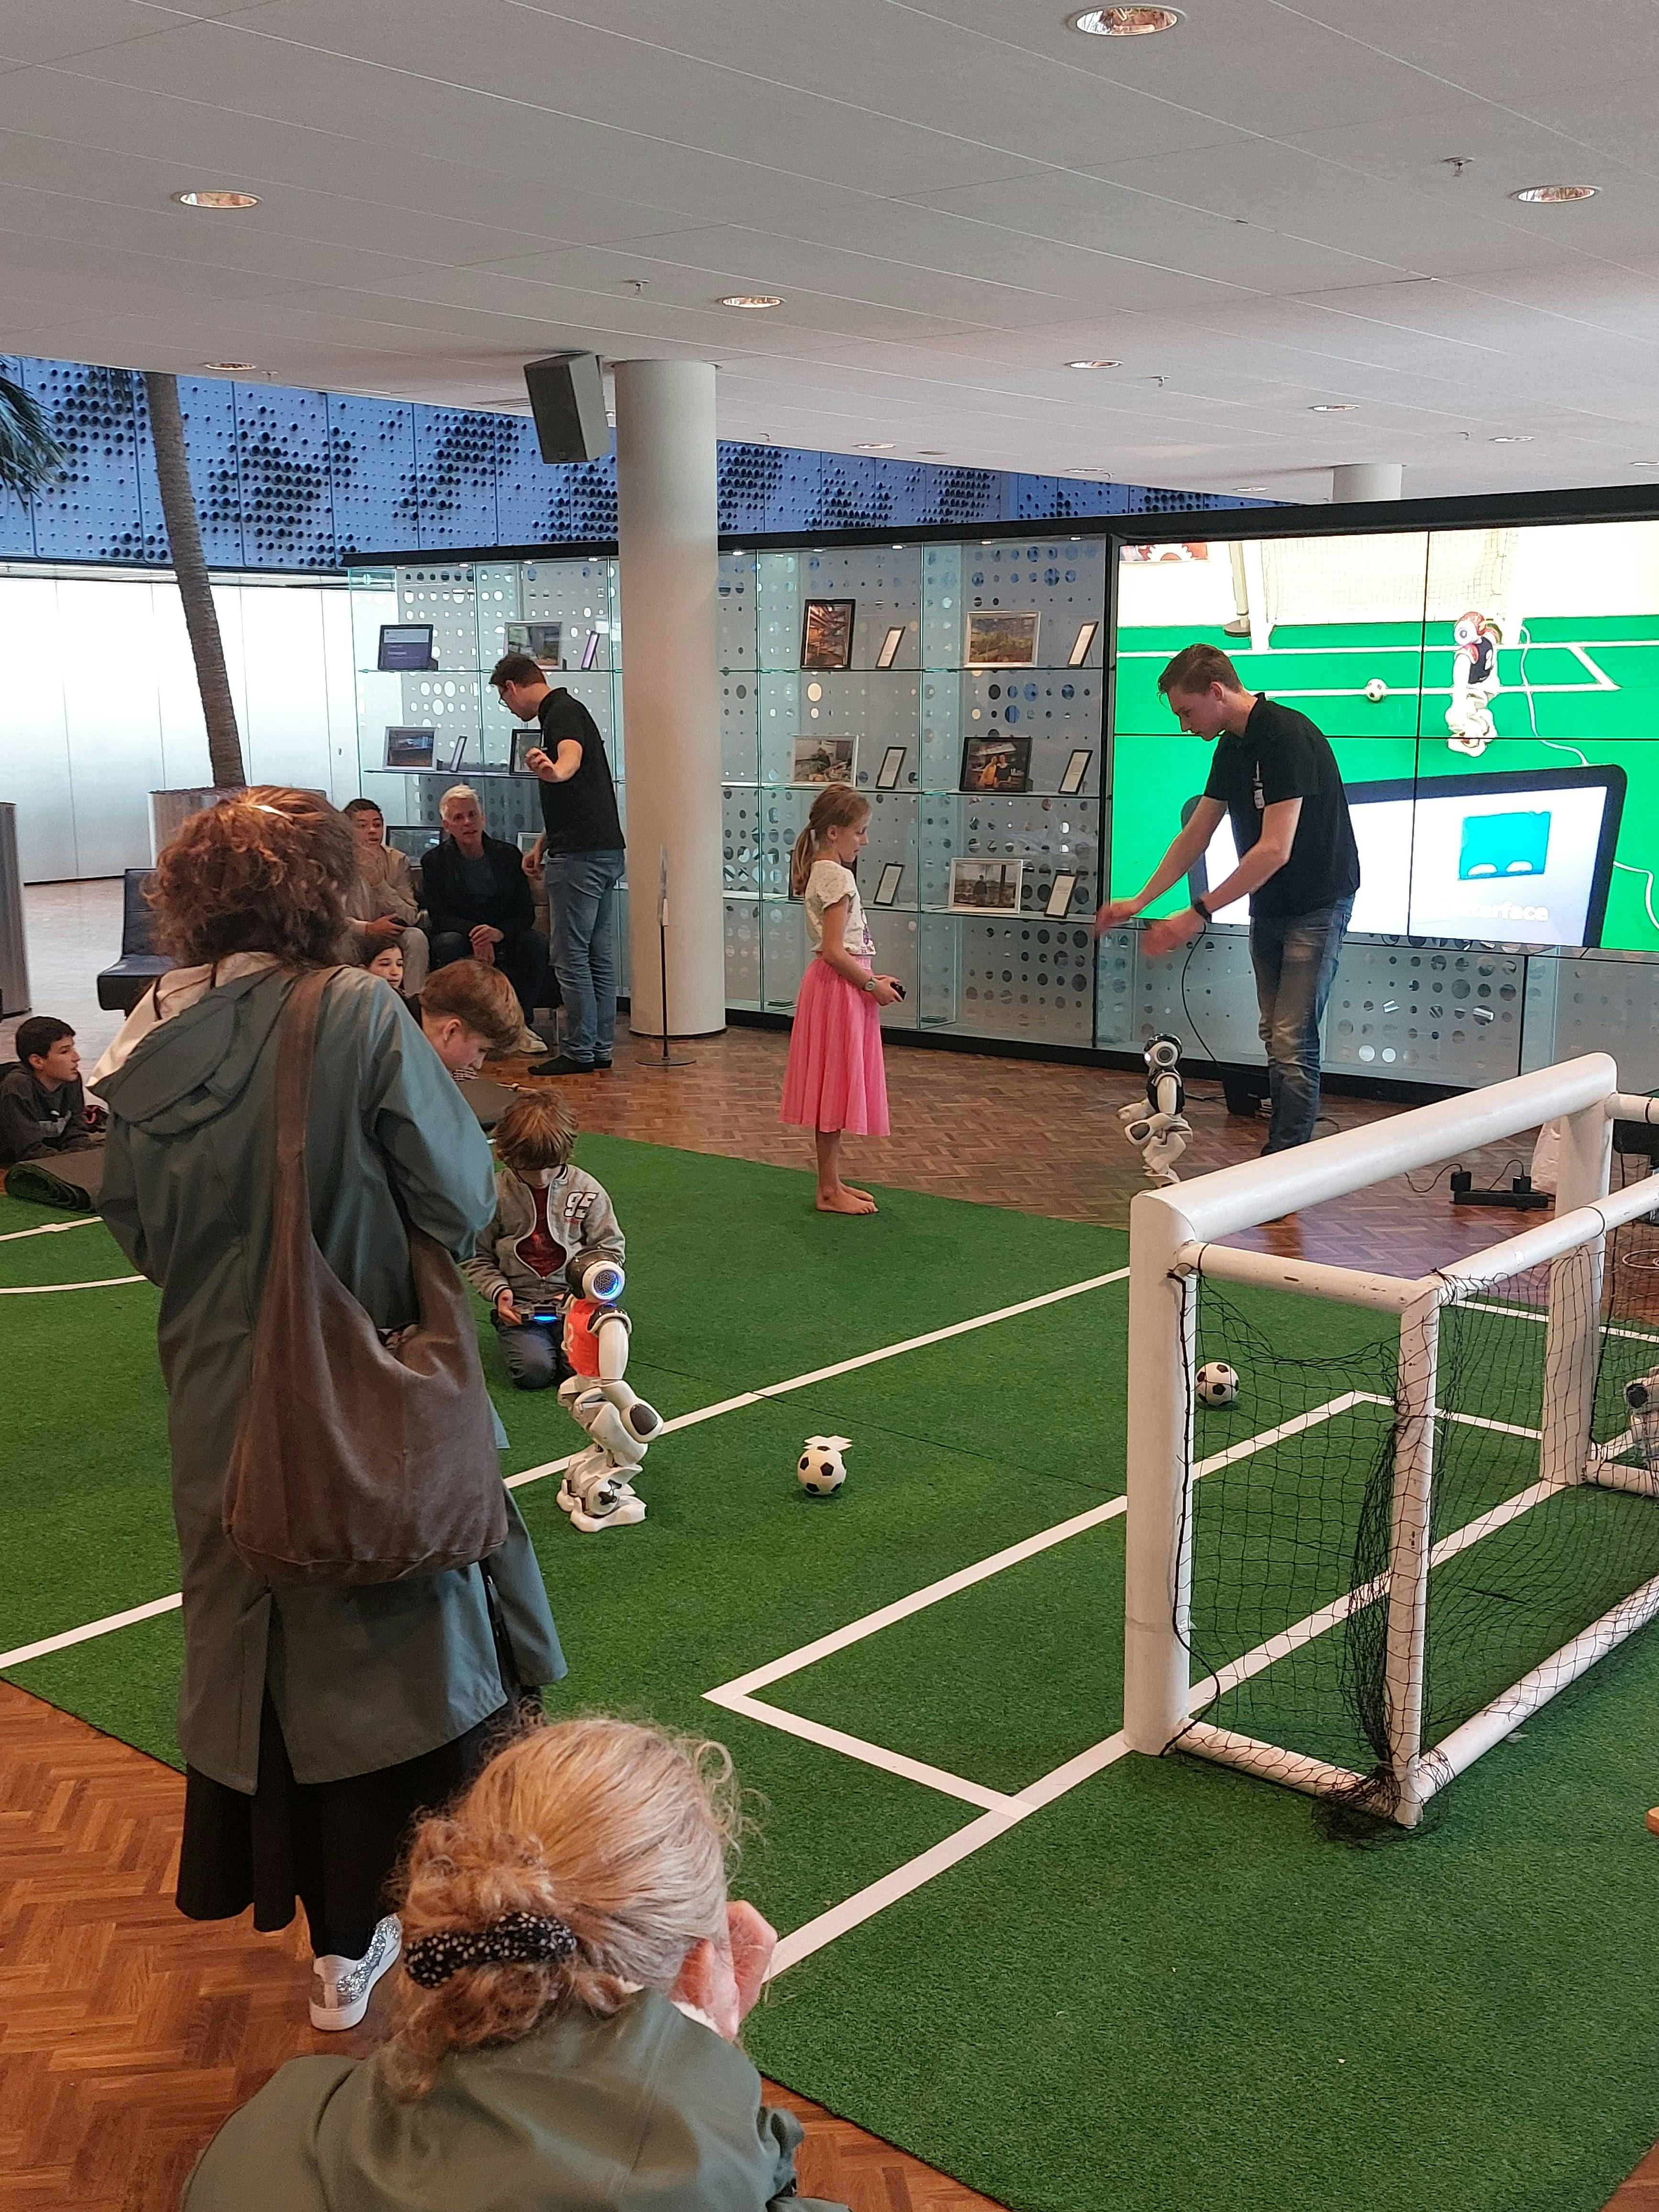 Football-playing robots at Science Park